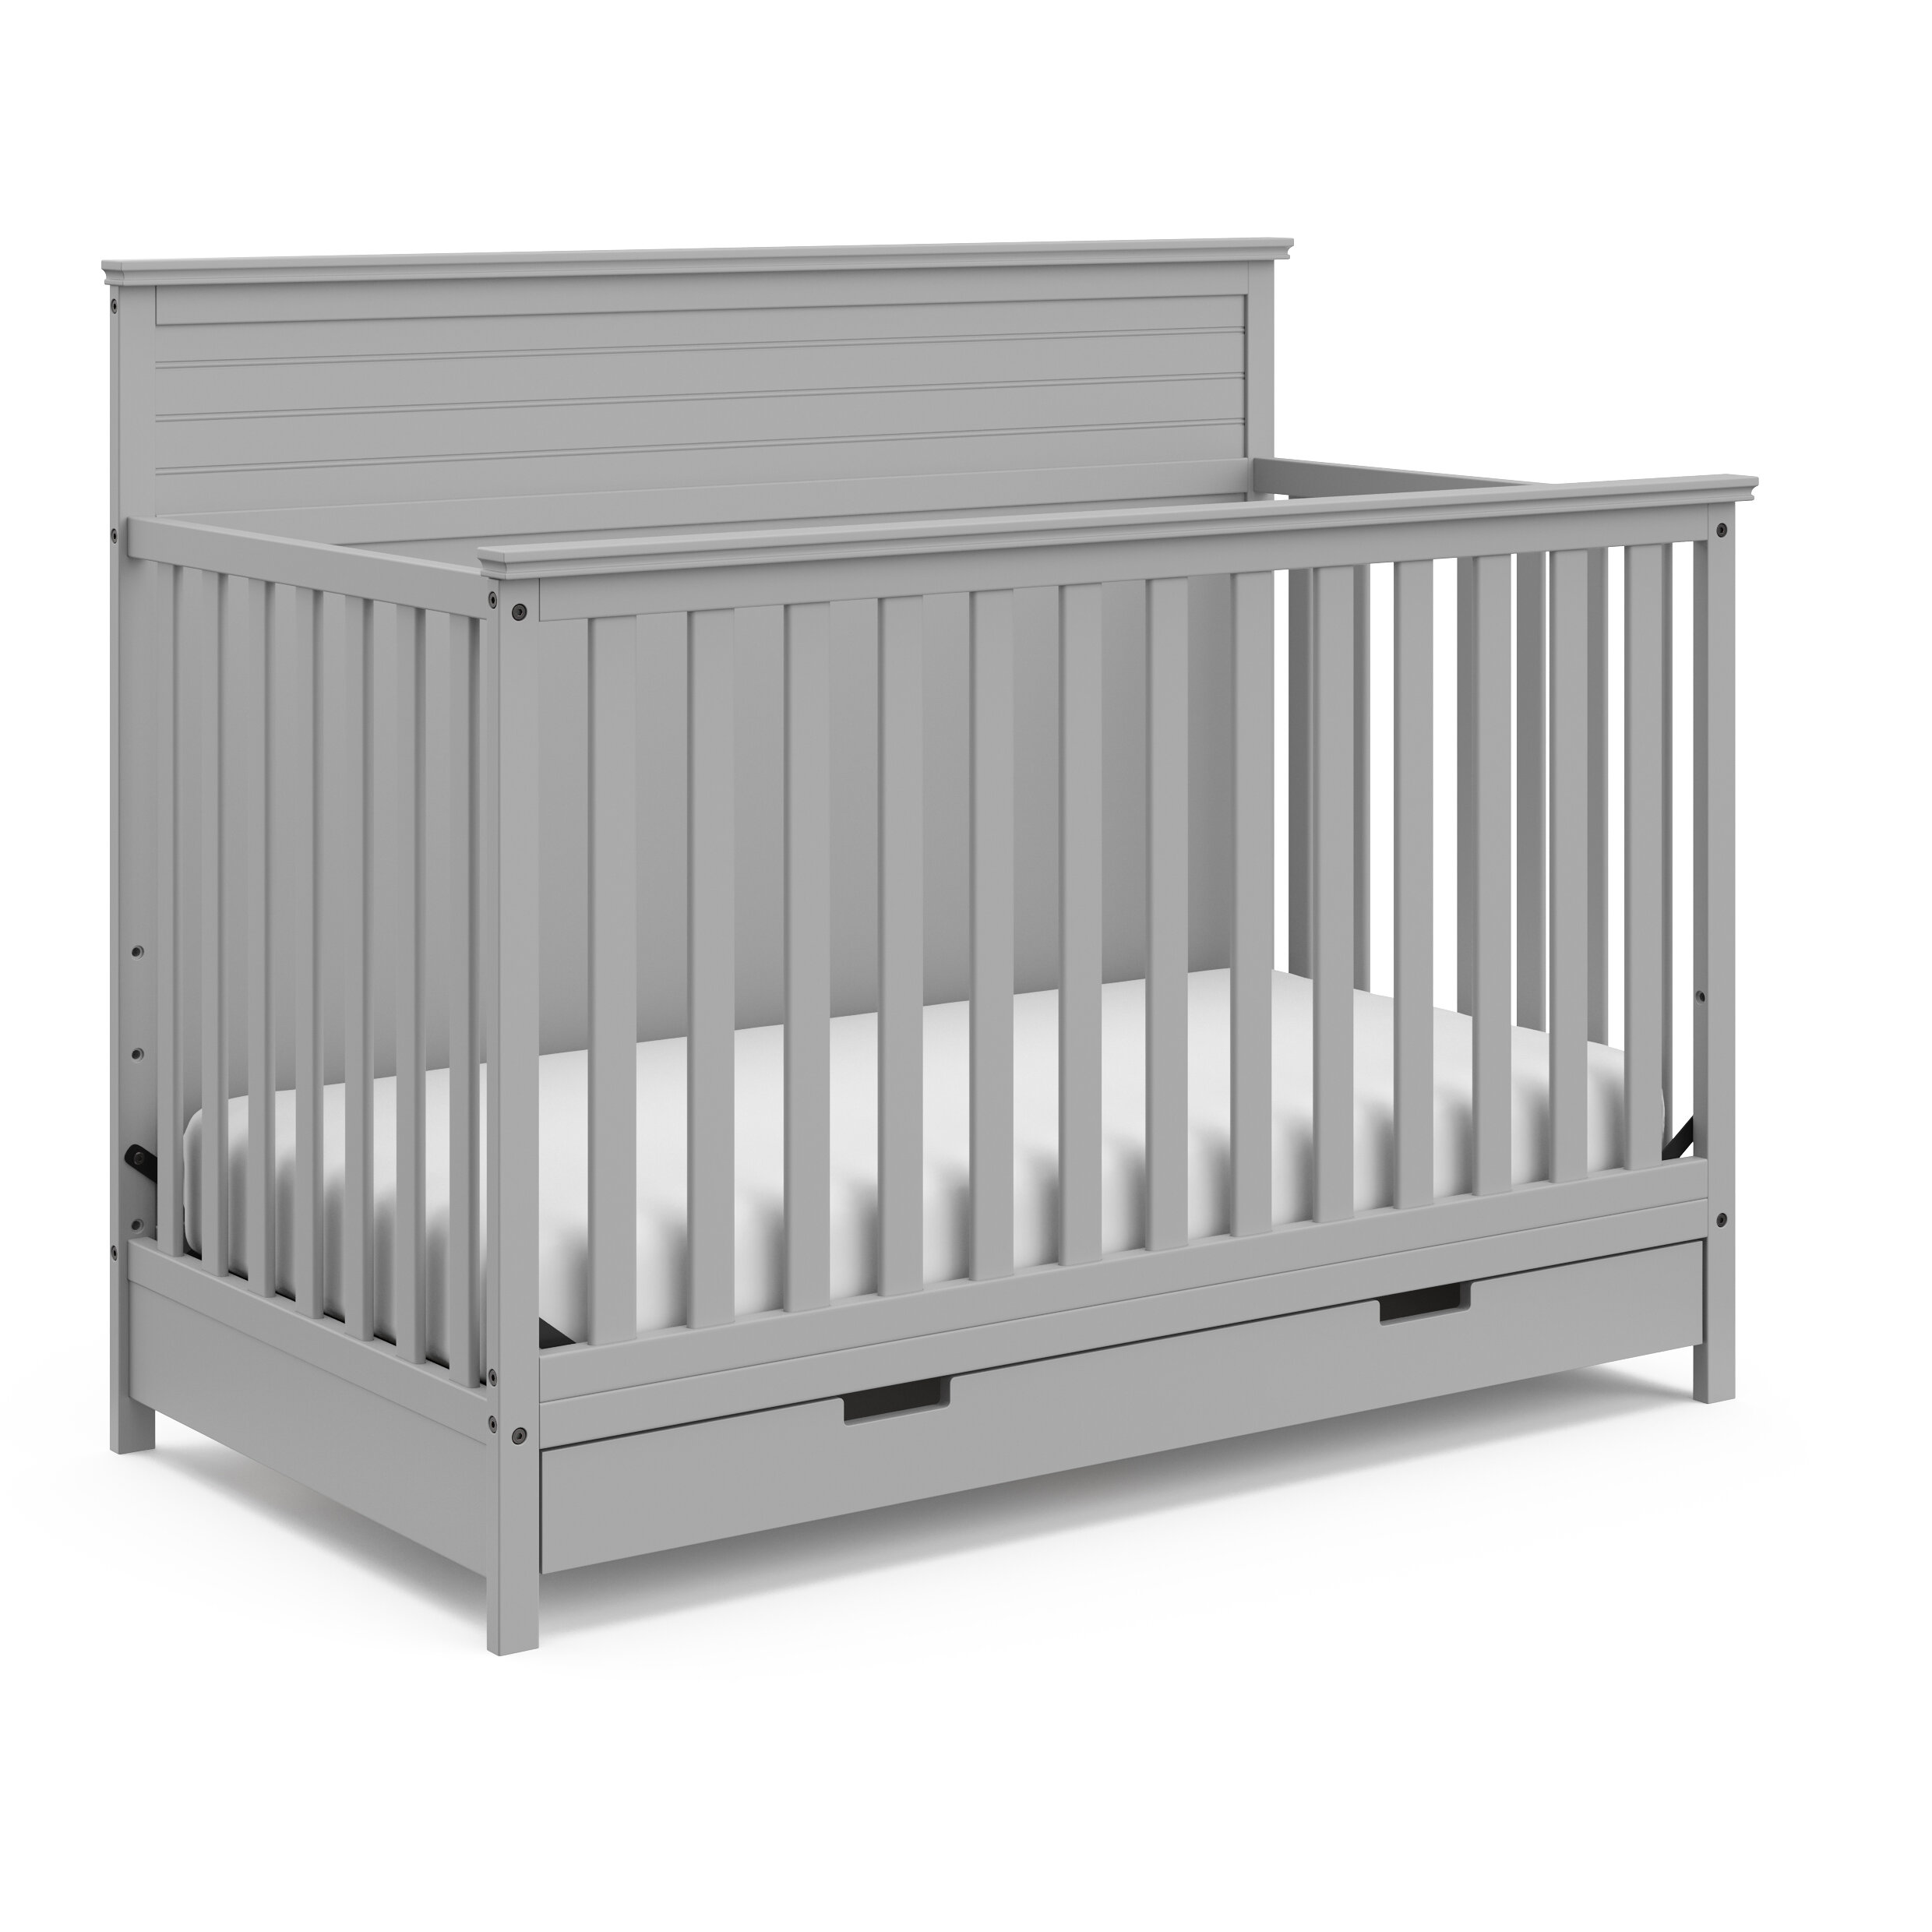 crib with drawer underneath